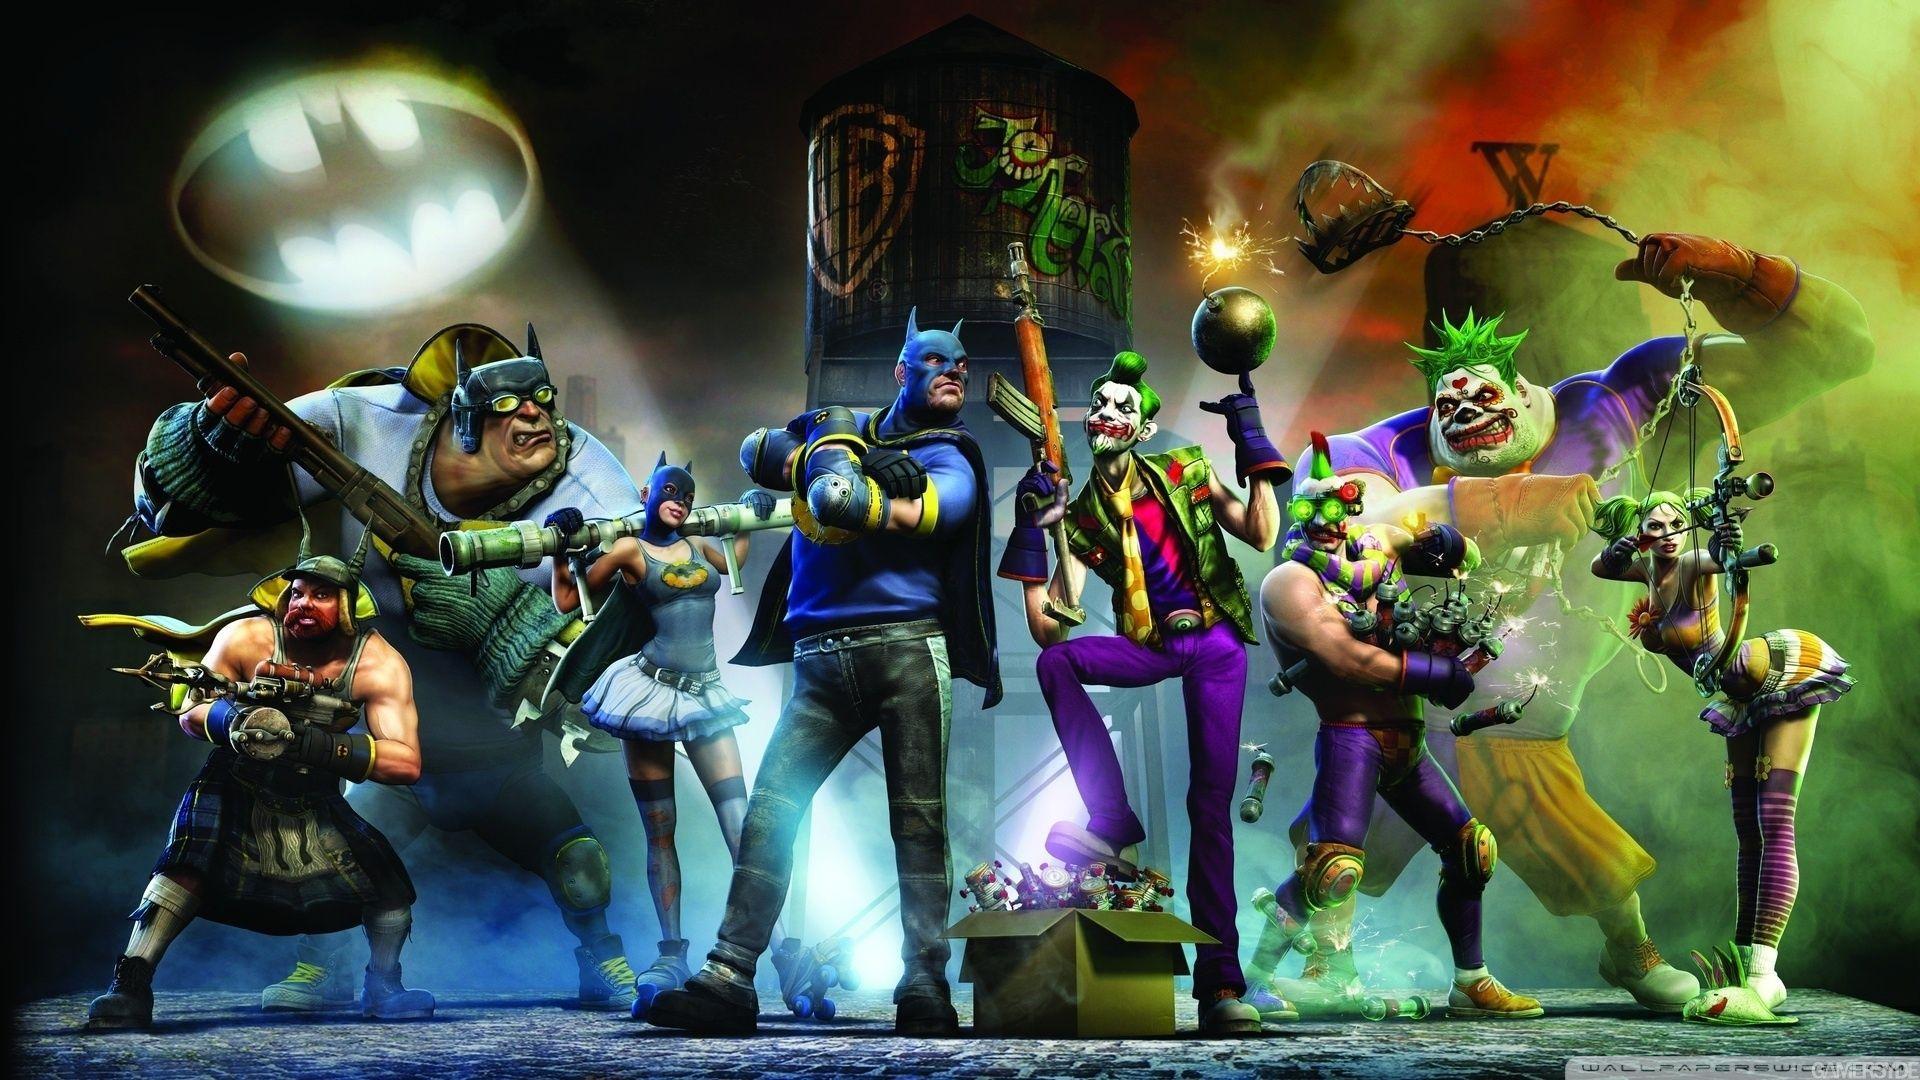 Joker Vs Batman HD desktop wallpaper, High Definition